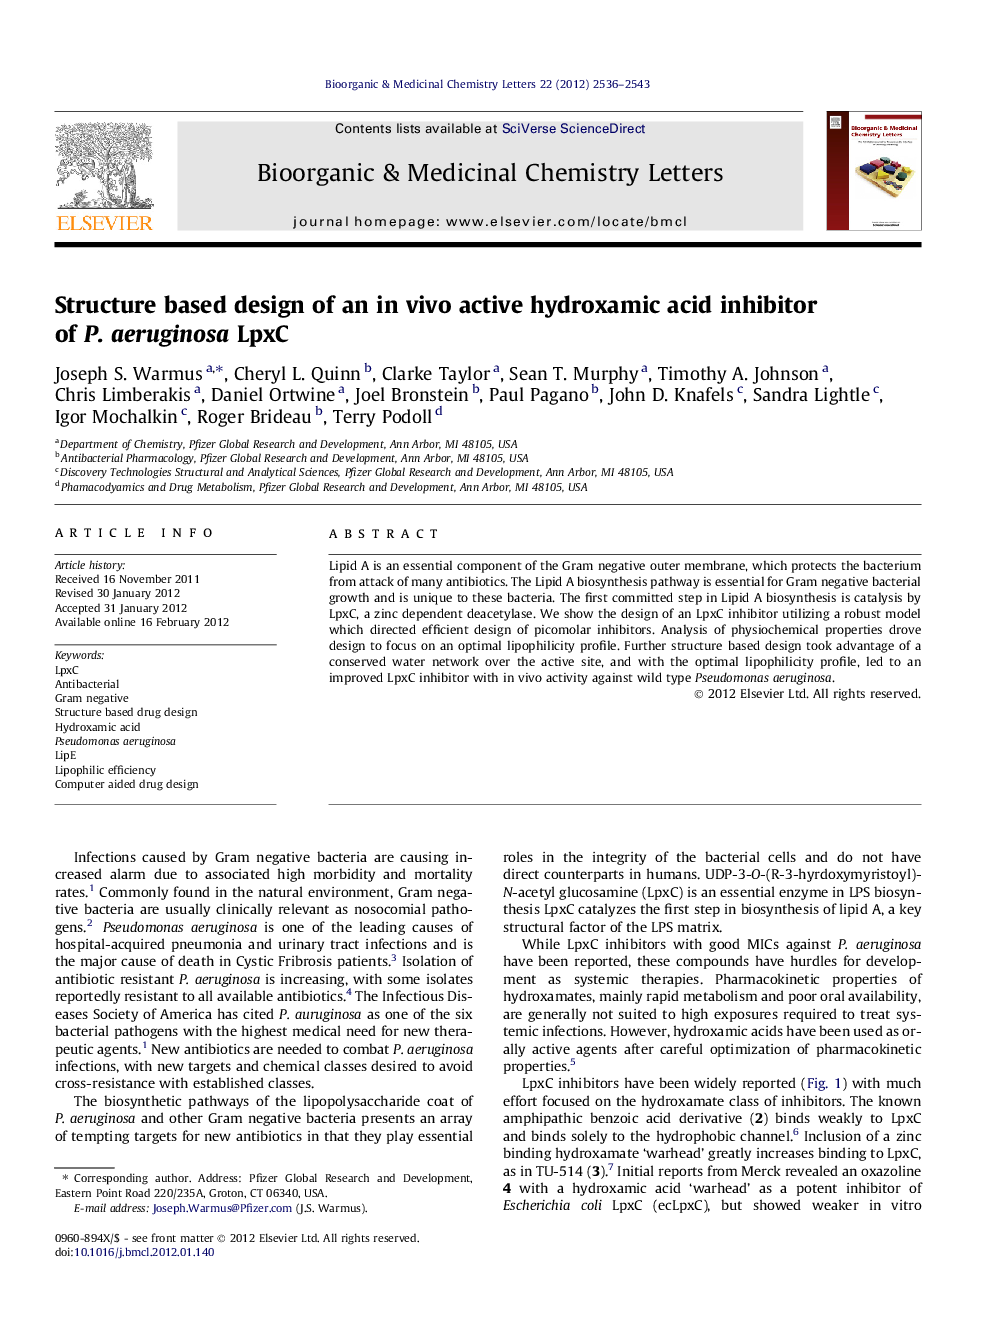 Structure based design of an in vivo active hydroxamic acid inhibitor of P. aeruginosa LpxC